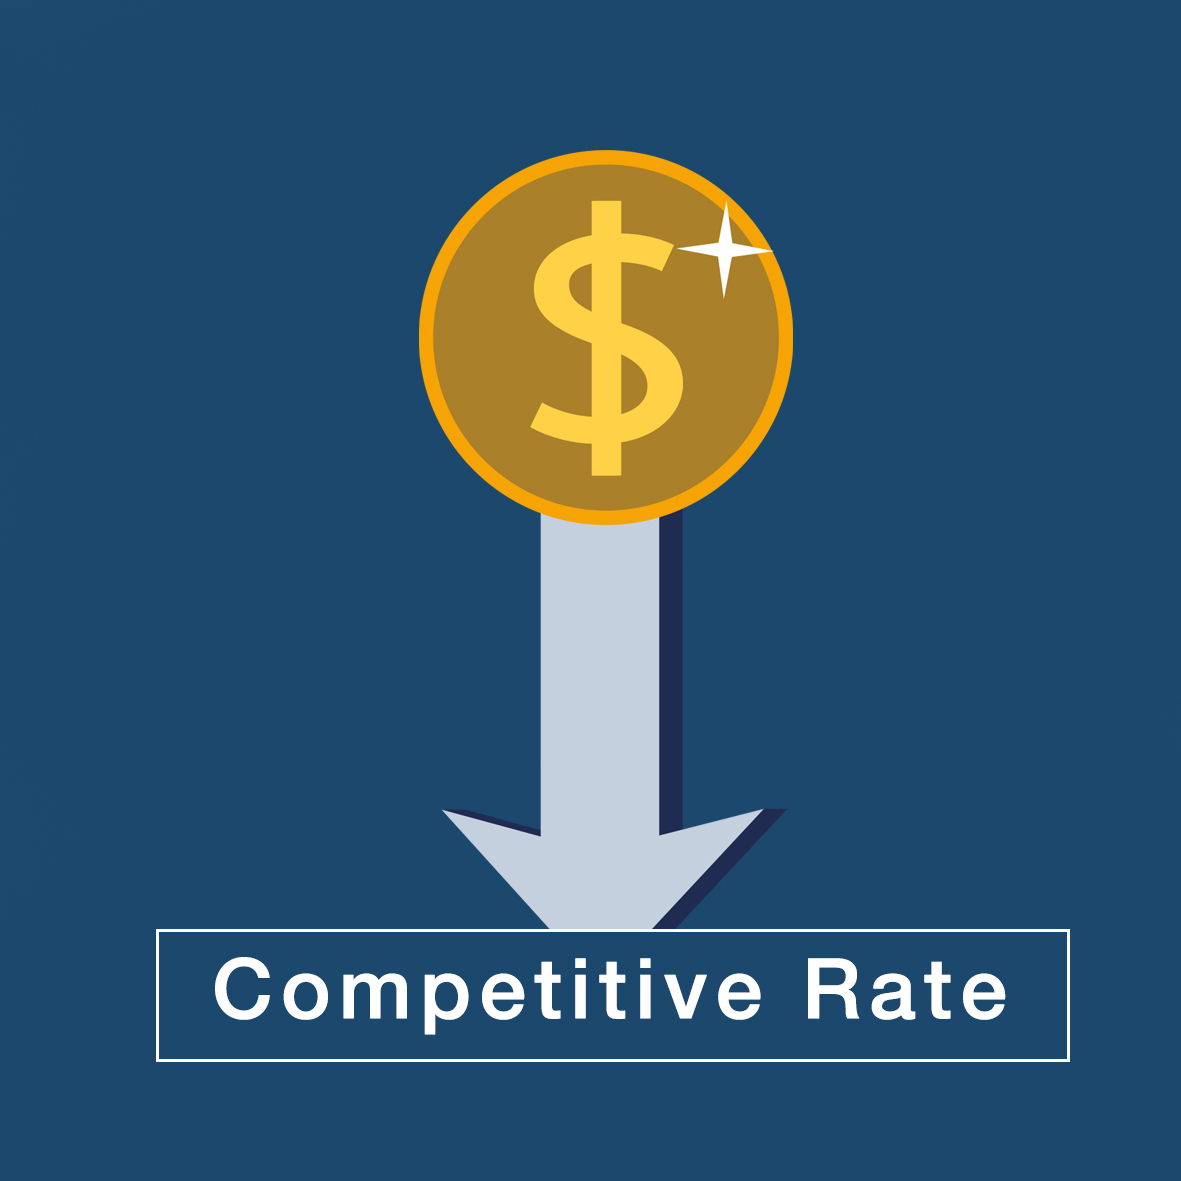 Ae manage competative rate